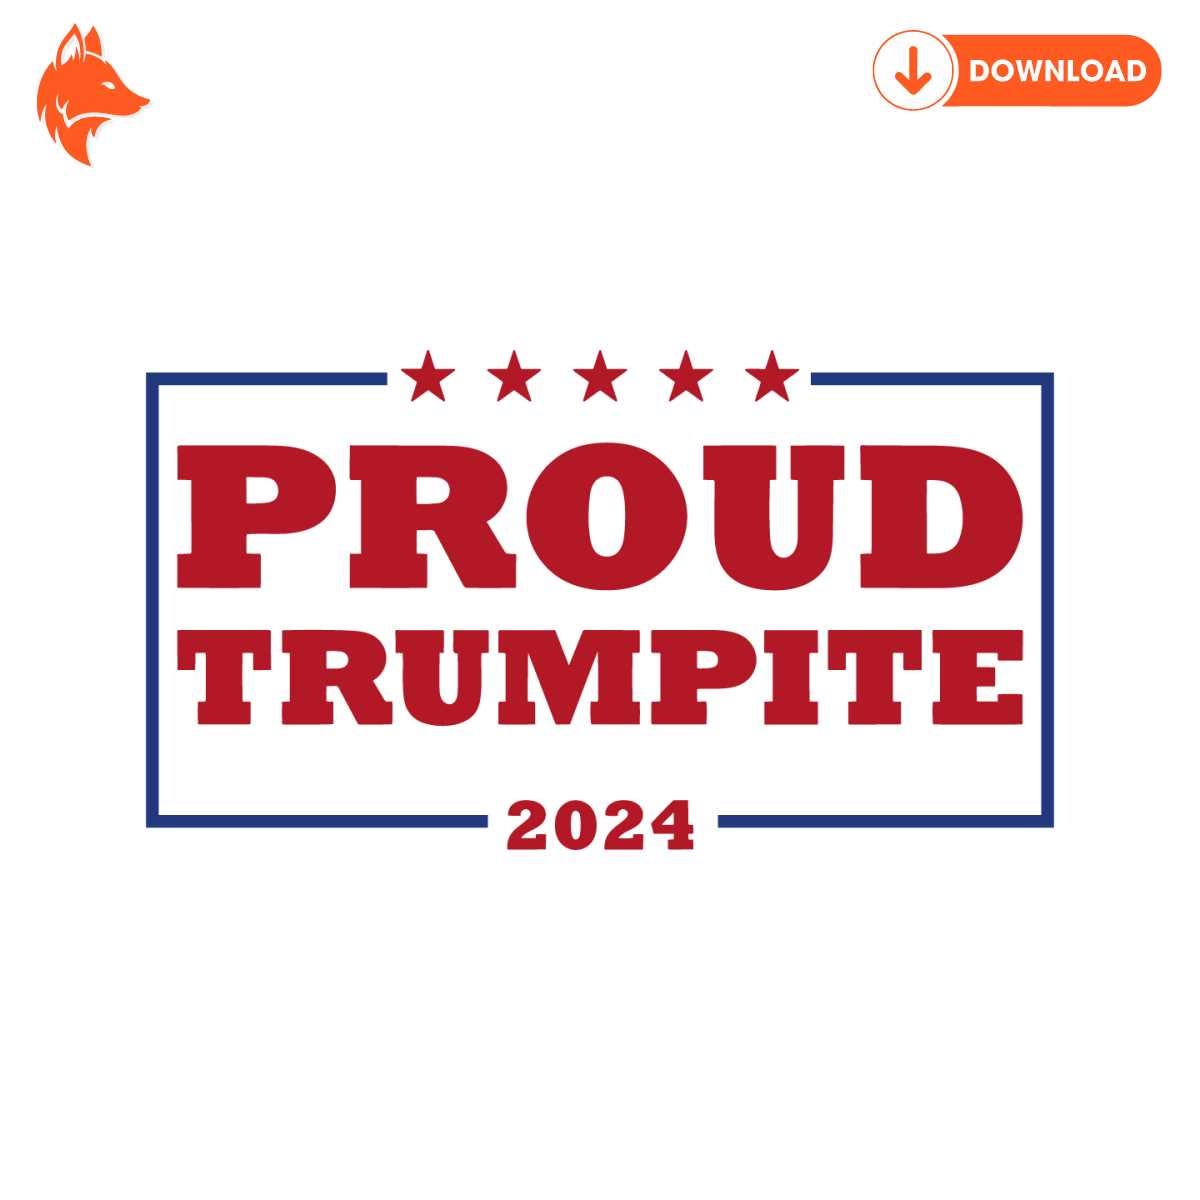 Free Pround Trumpite 2024 Funny Election Year SVG